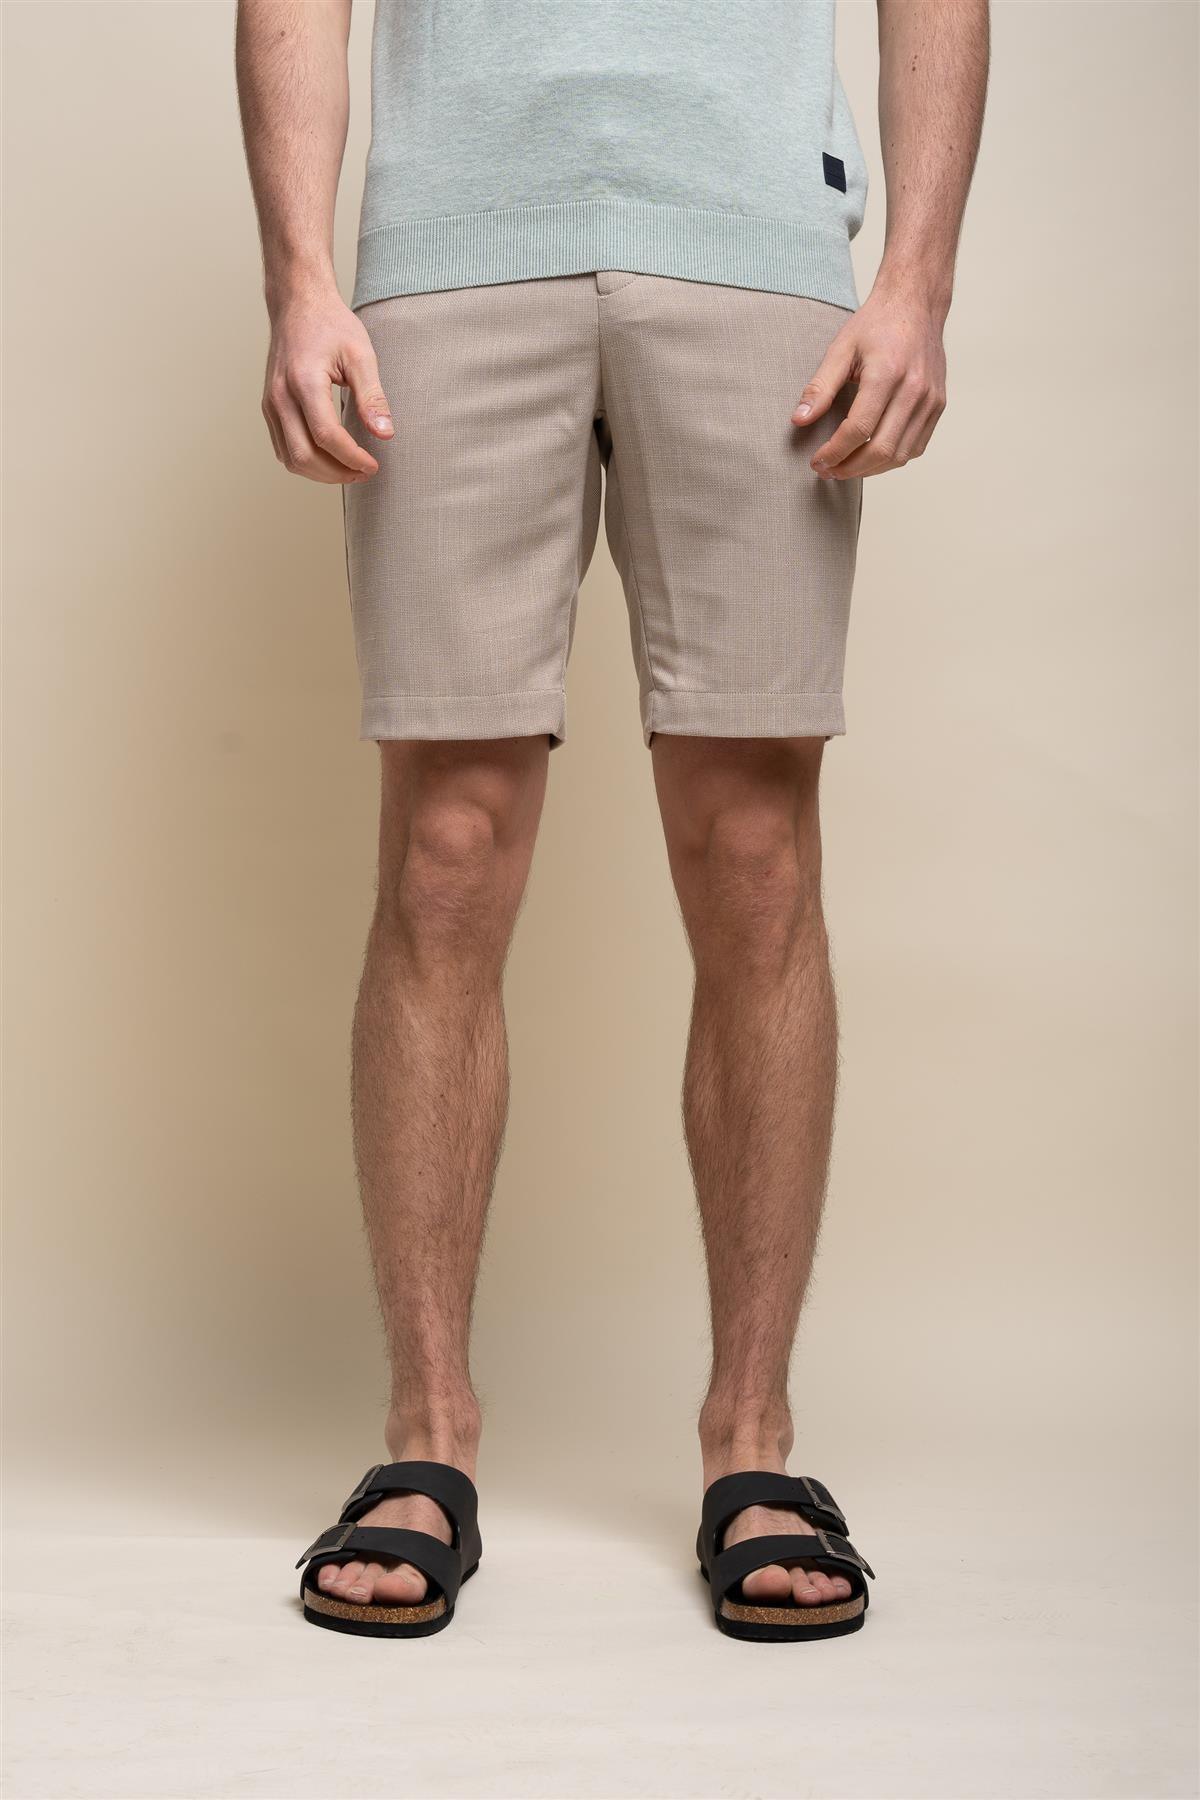 Miami beige shorts front